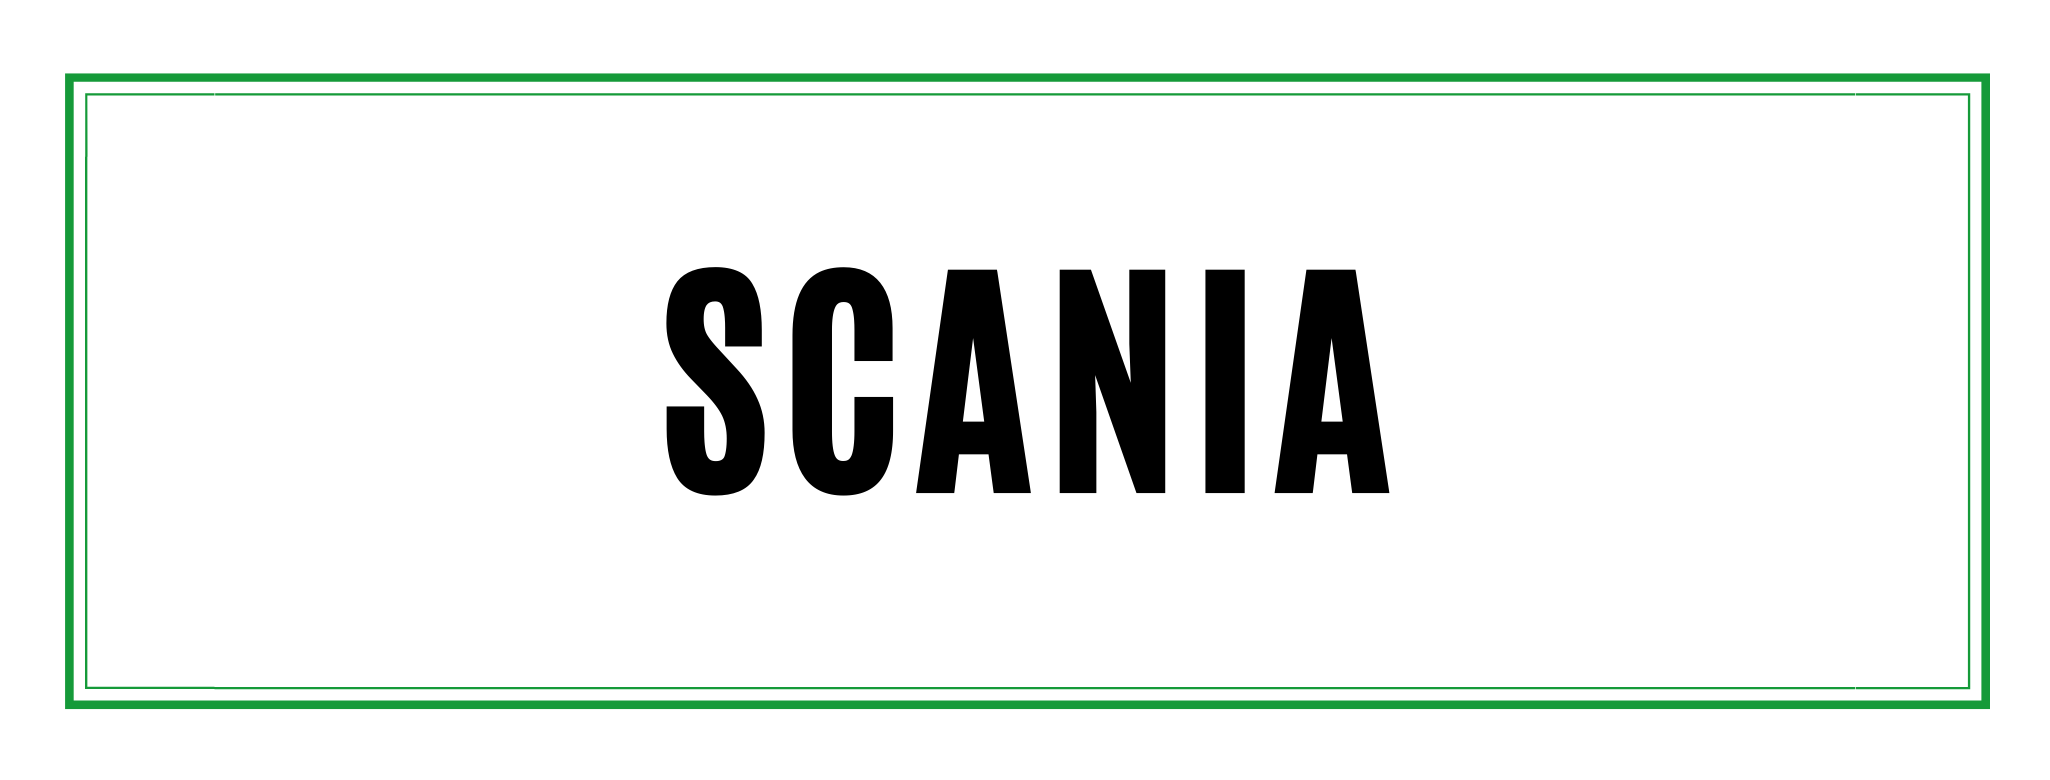 Scania stickers